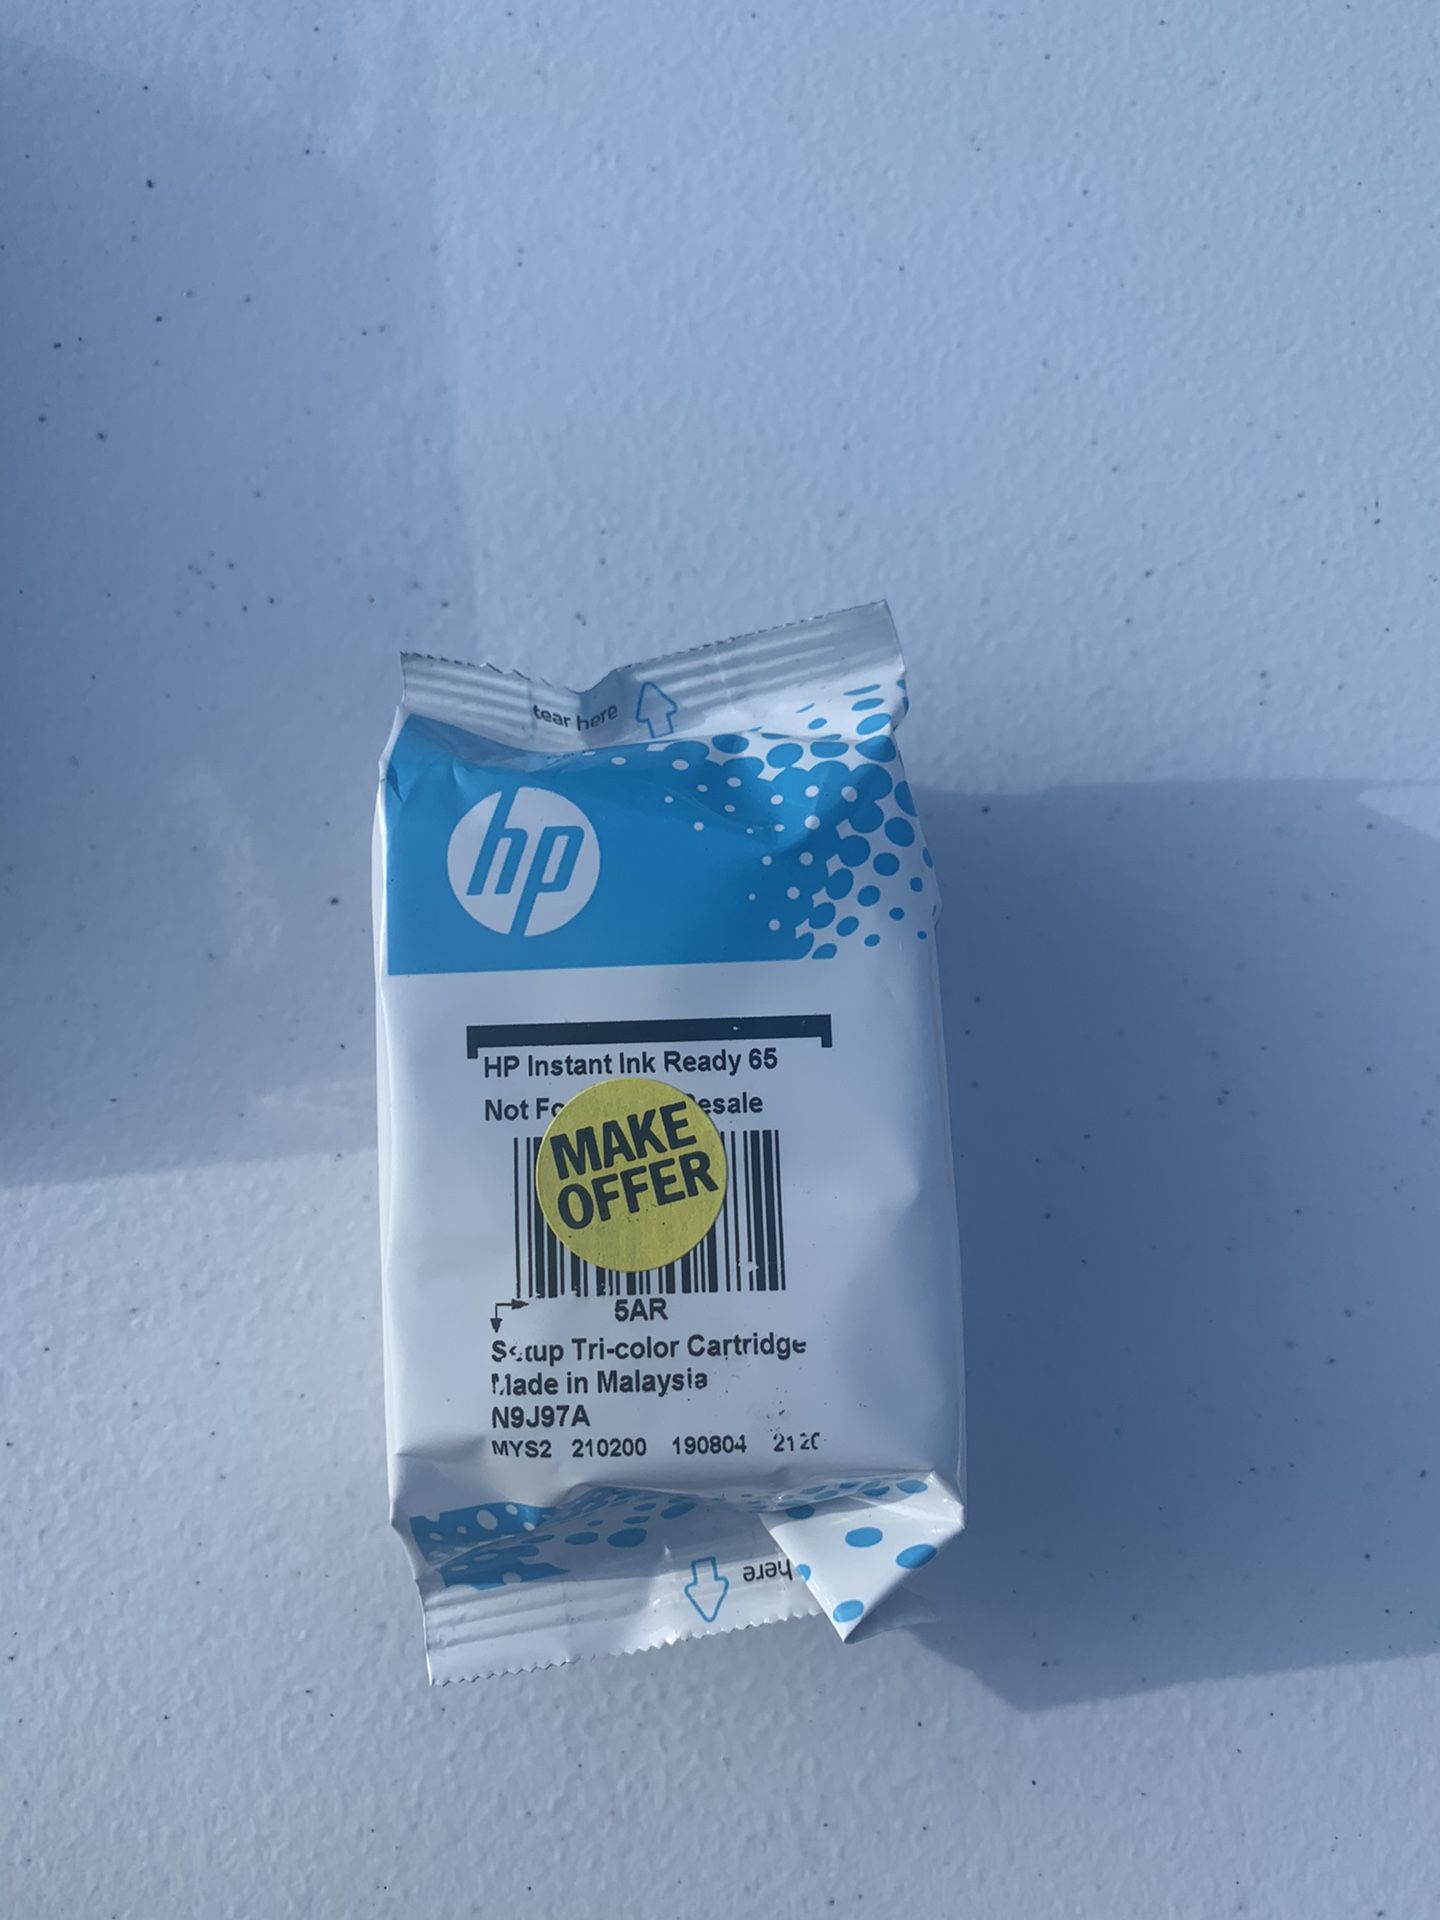 HP instant ink cartridge